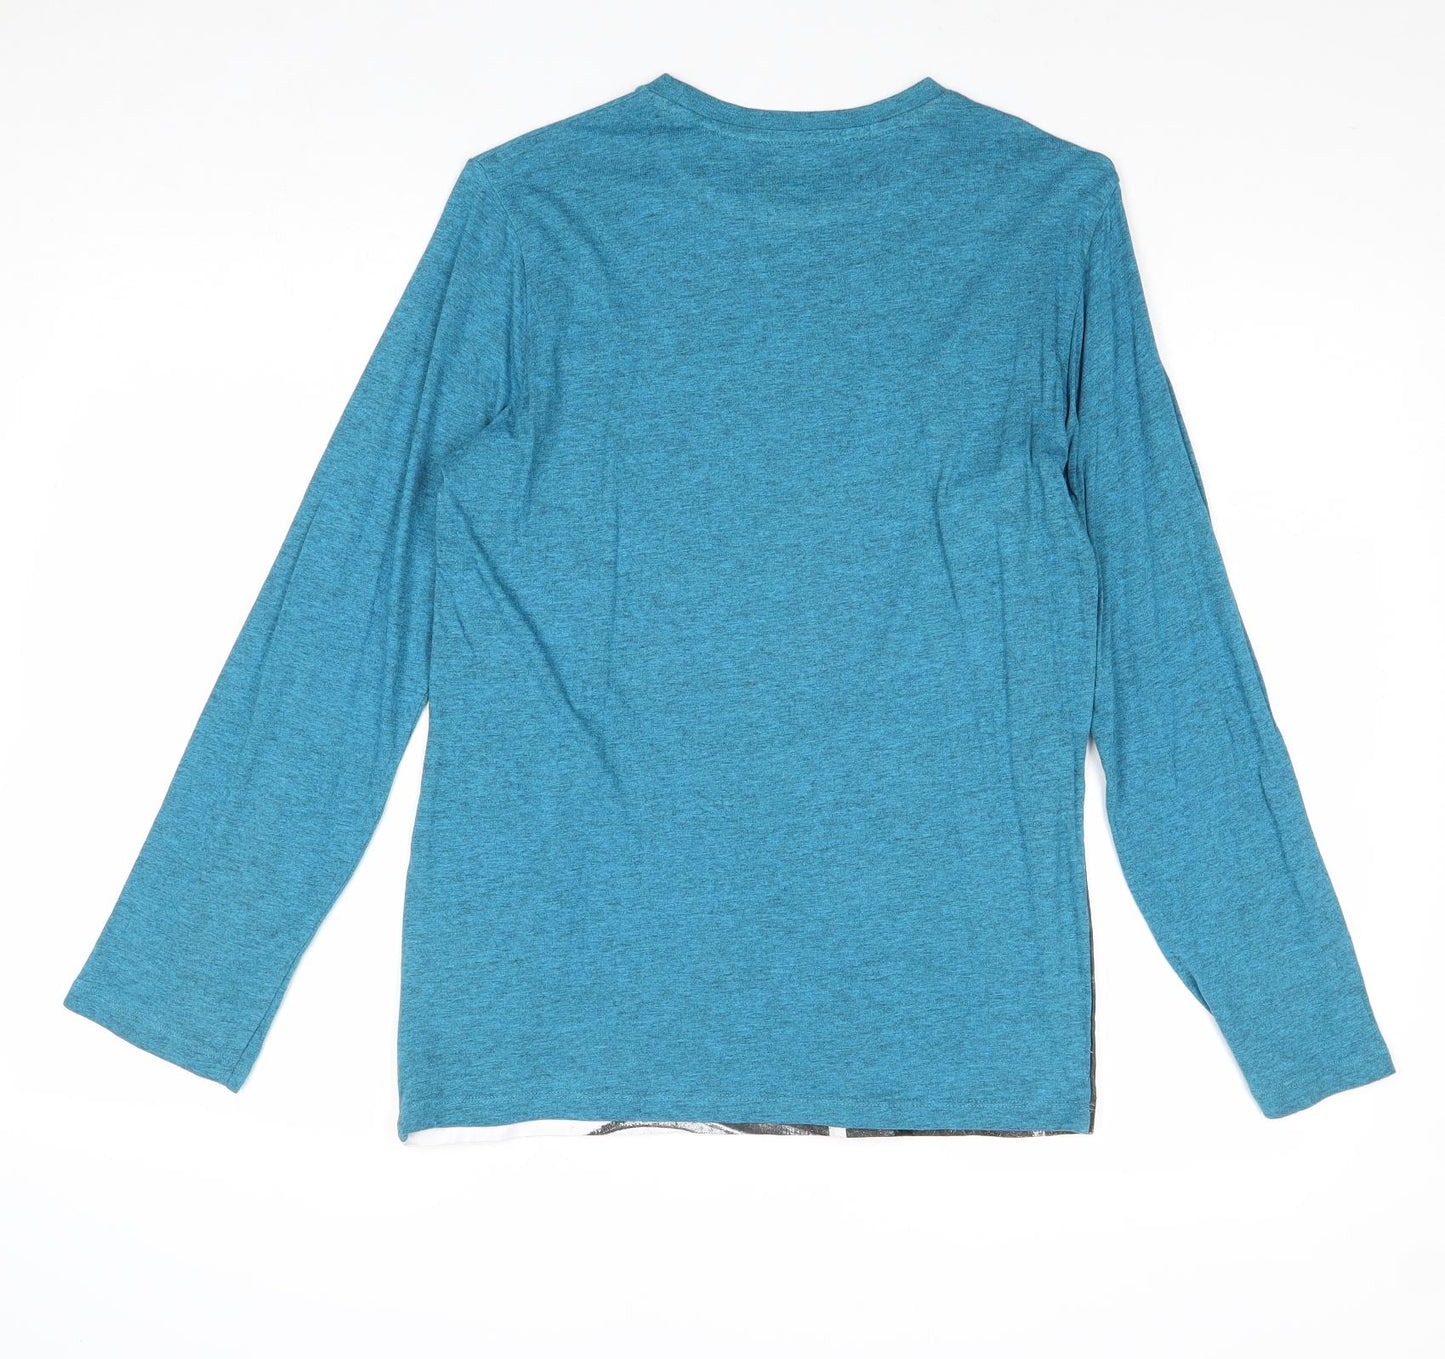 Blue Zoo Boys Blue Cotton Basic T-Shirt Size 13-14 Years Round Neck Pullover - Dinosaur Print